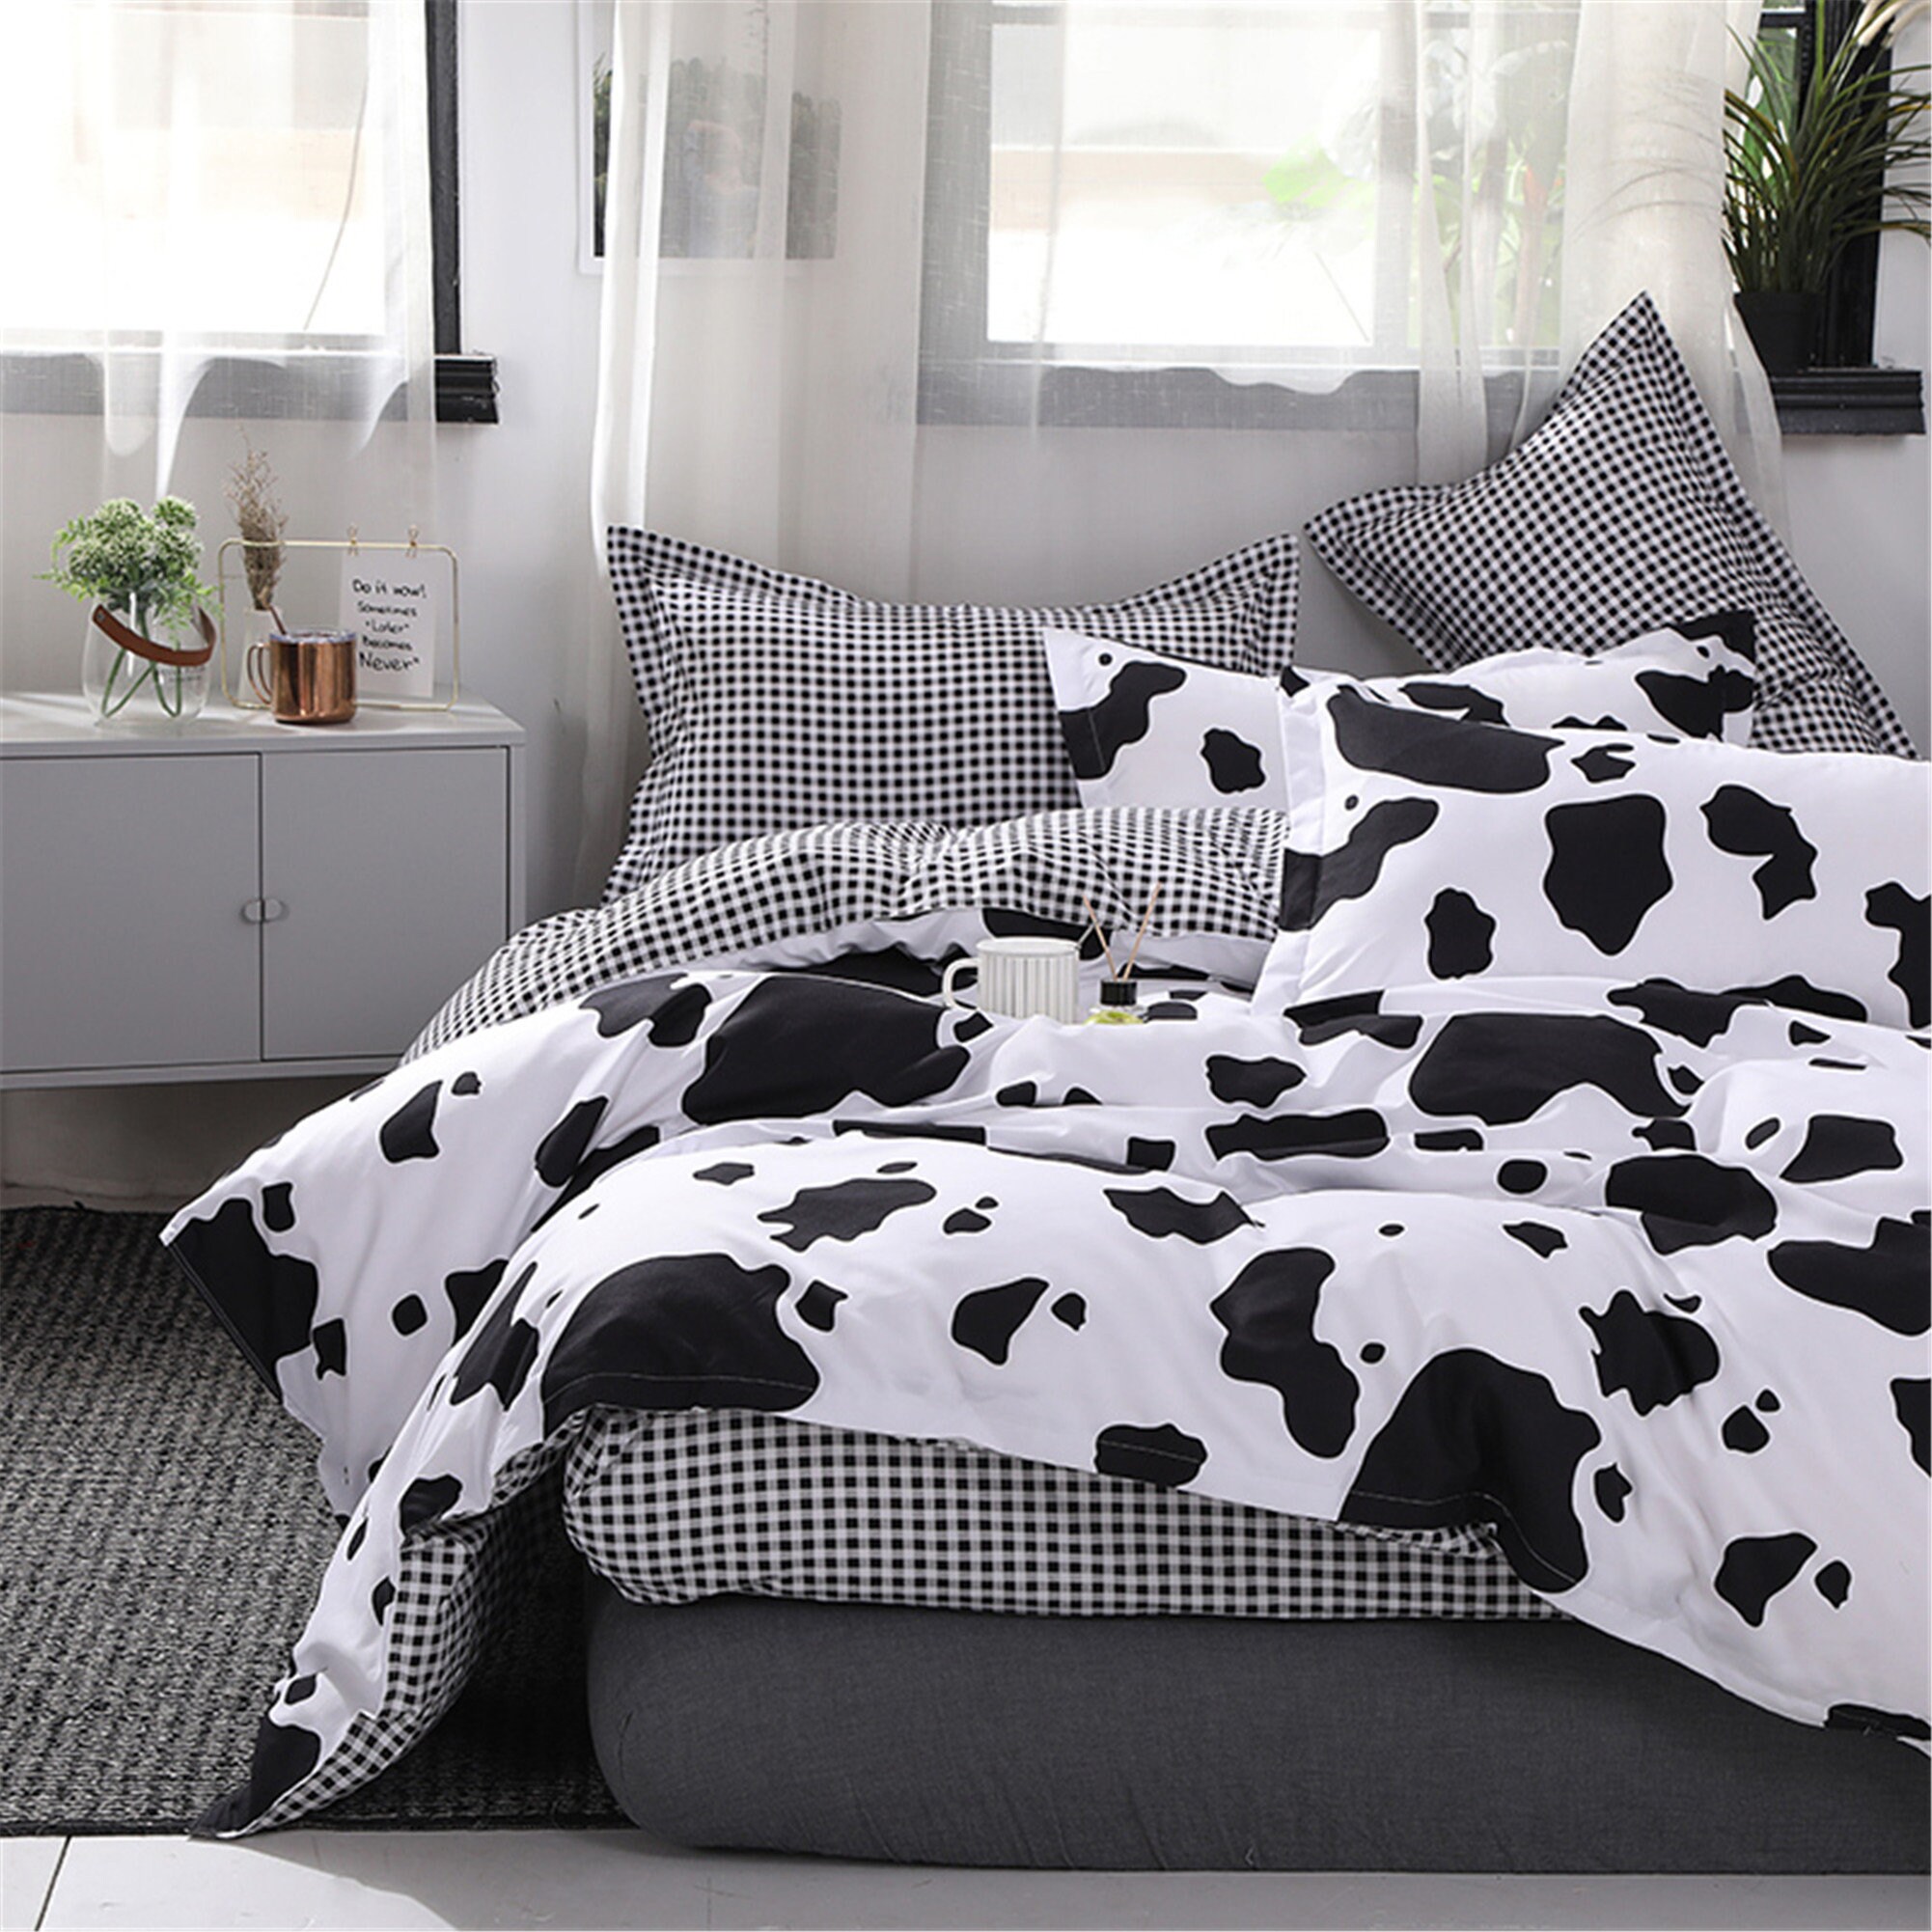 Black And White Cow Duvet Cover Set, Duvet Cover Cow Print Bedding